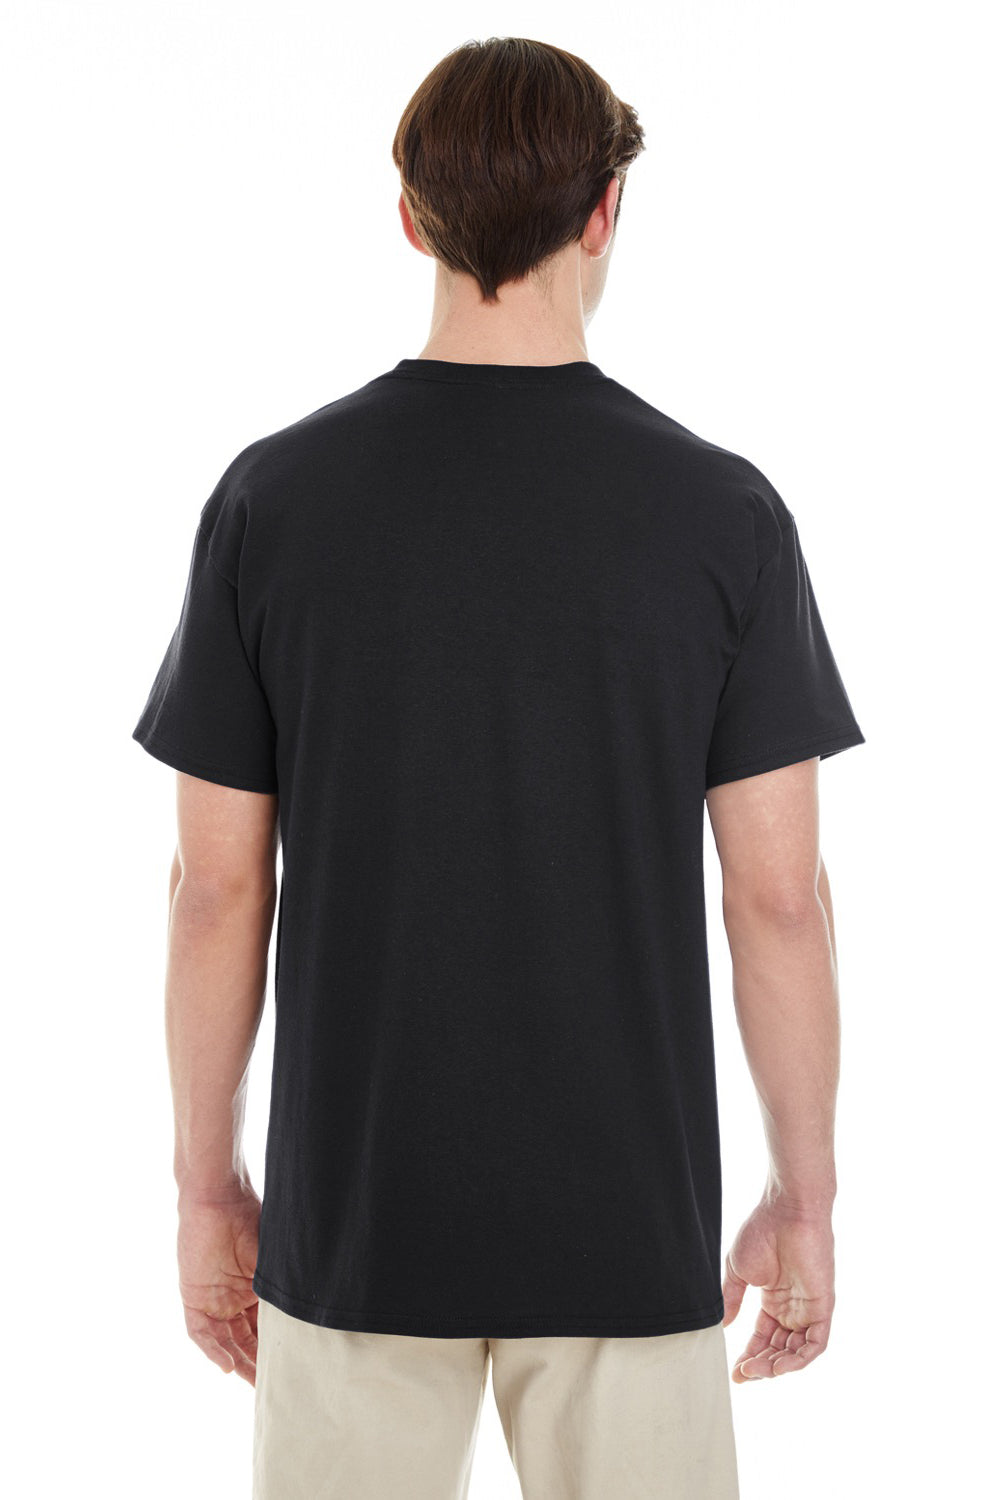 Gildan G530 Mens Short Sleeve Crewneck T-Shirt w/ Pocket Black Back